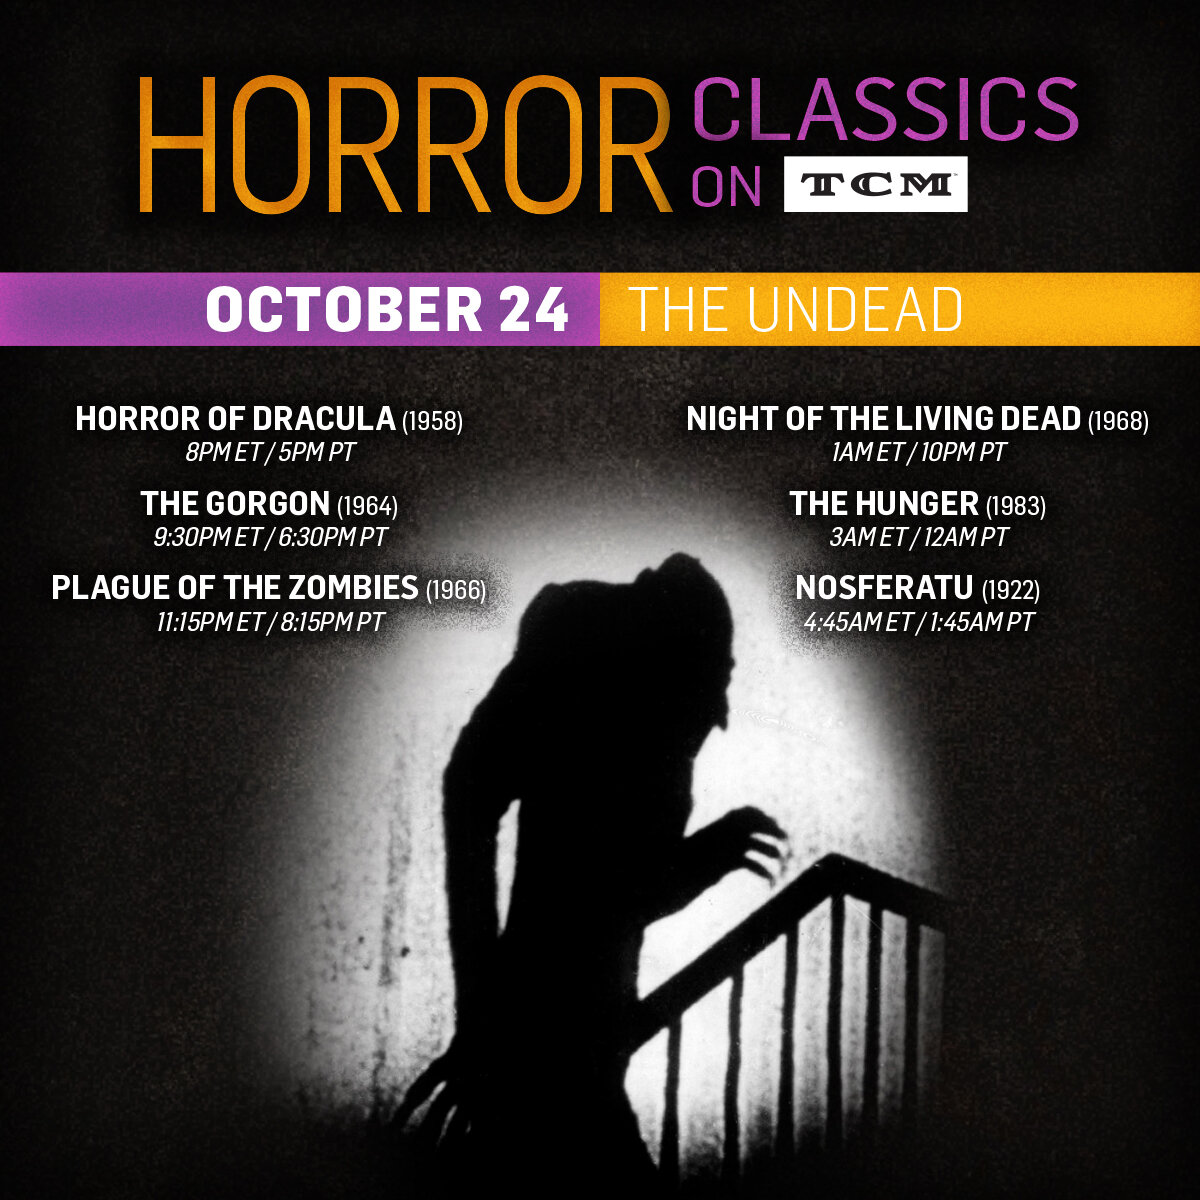 TCM_SocialAssets_19-10_HorrorClassics_Oct24_FNL.jpg